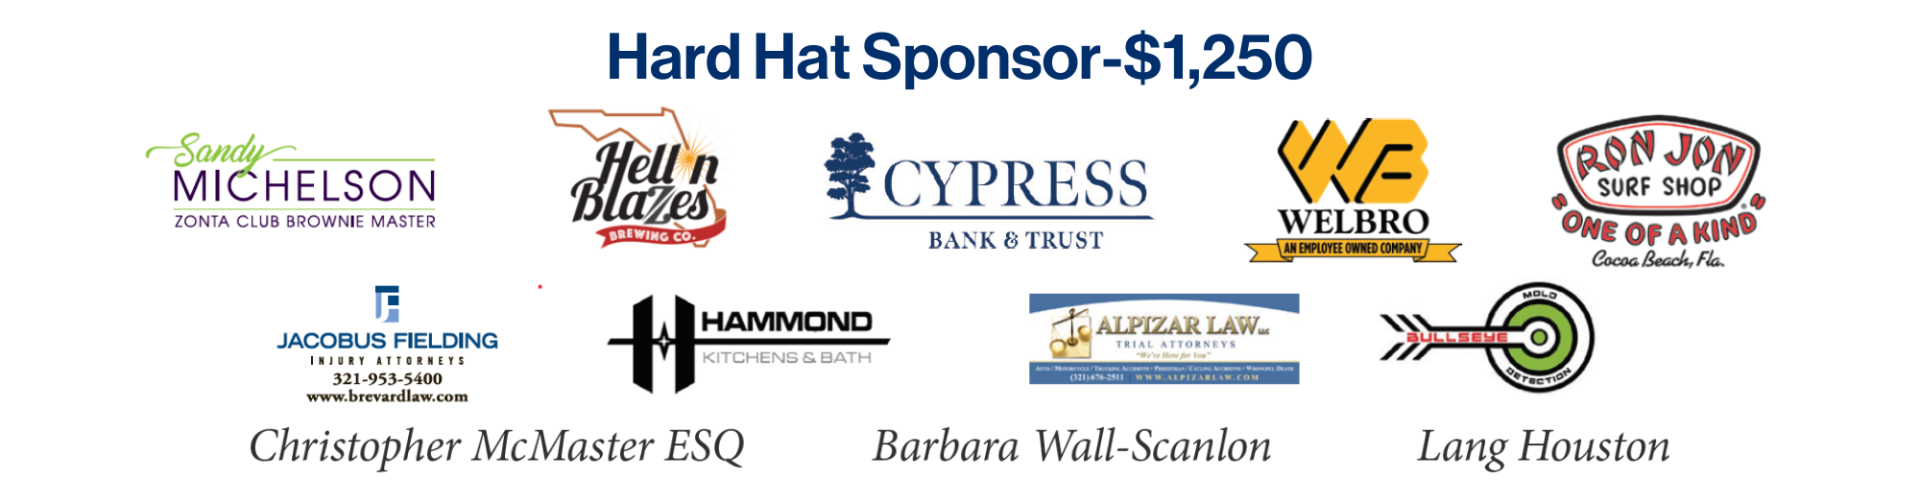 Hard Hat Sponsor Event Logos